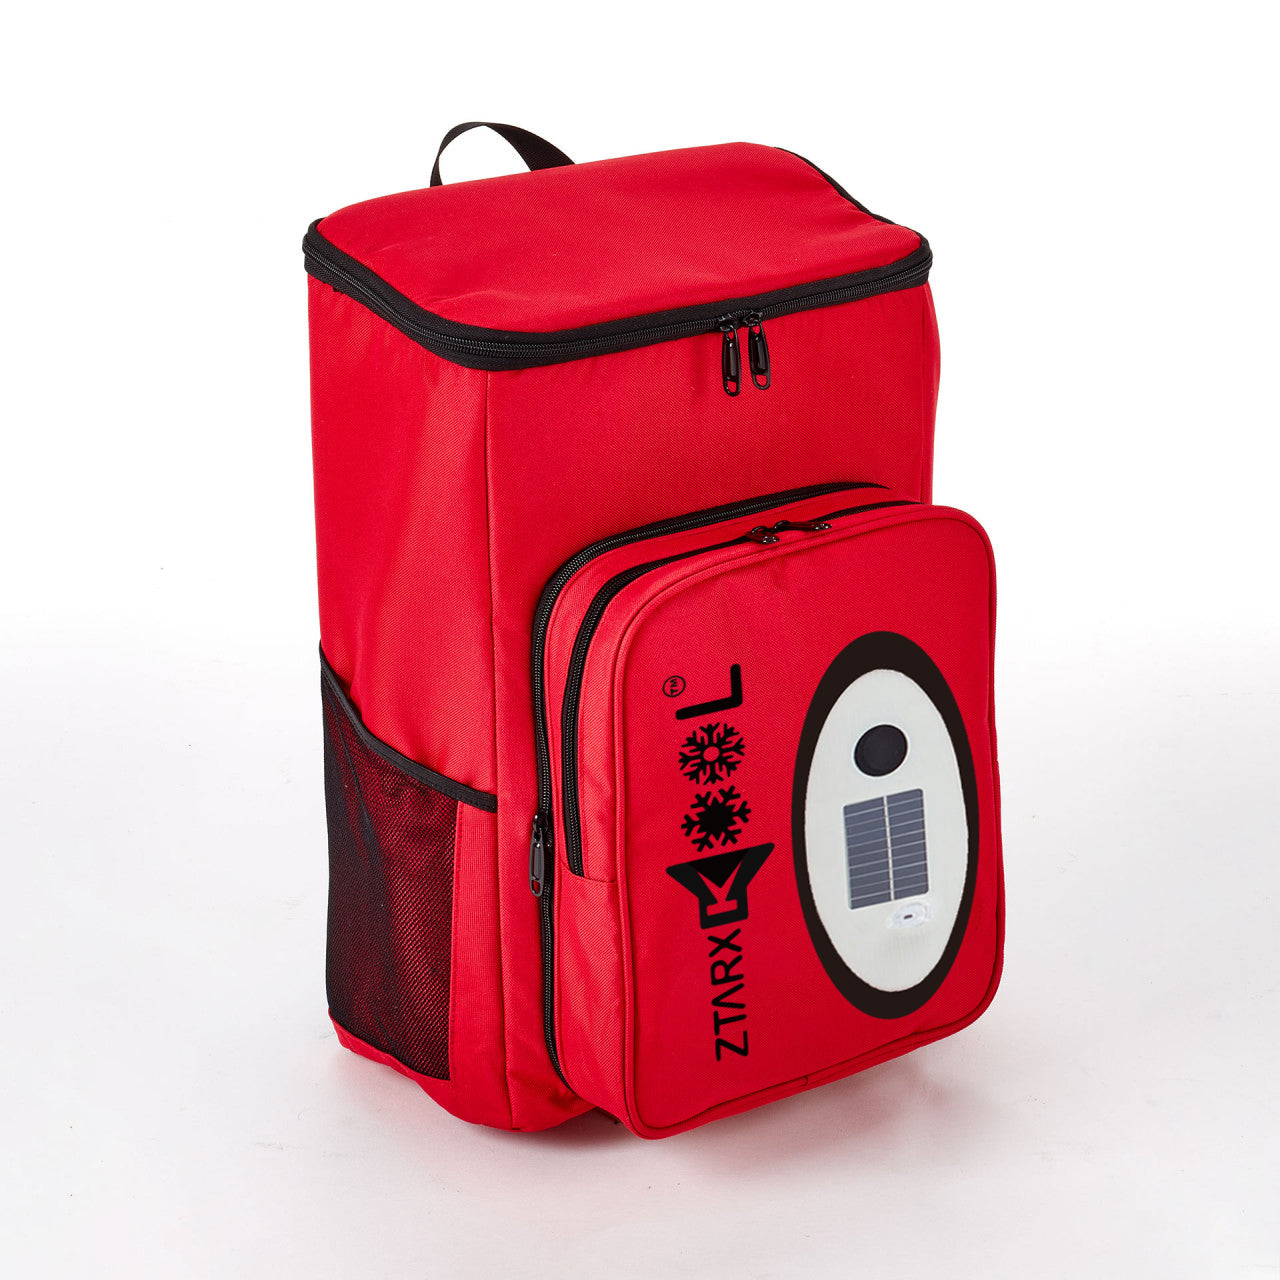 Ztarx S20-NL02-R02 Multifunctional Cooler Bag: Waterproof, Solar & USB Charging, Speaker, LED Lights